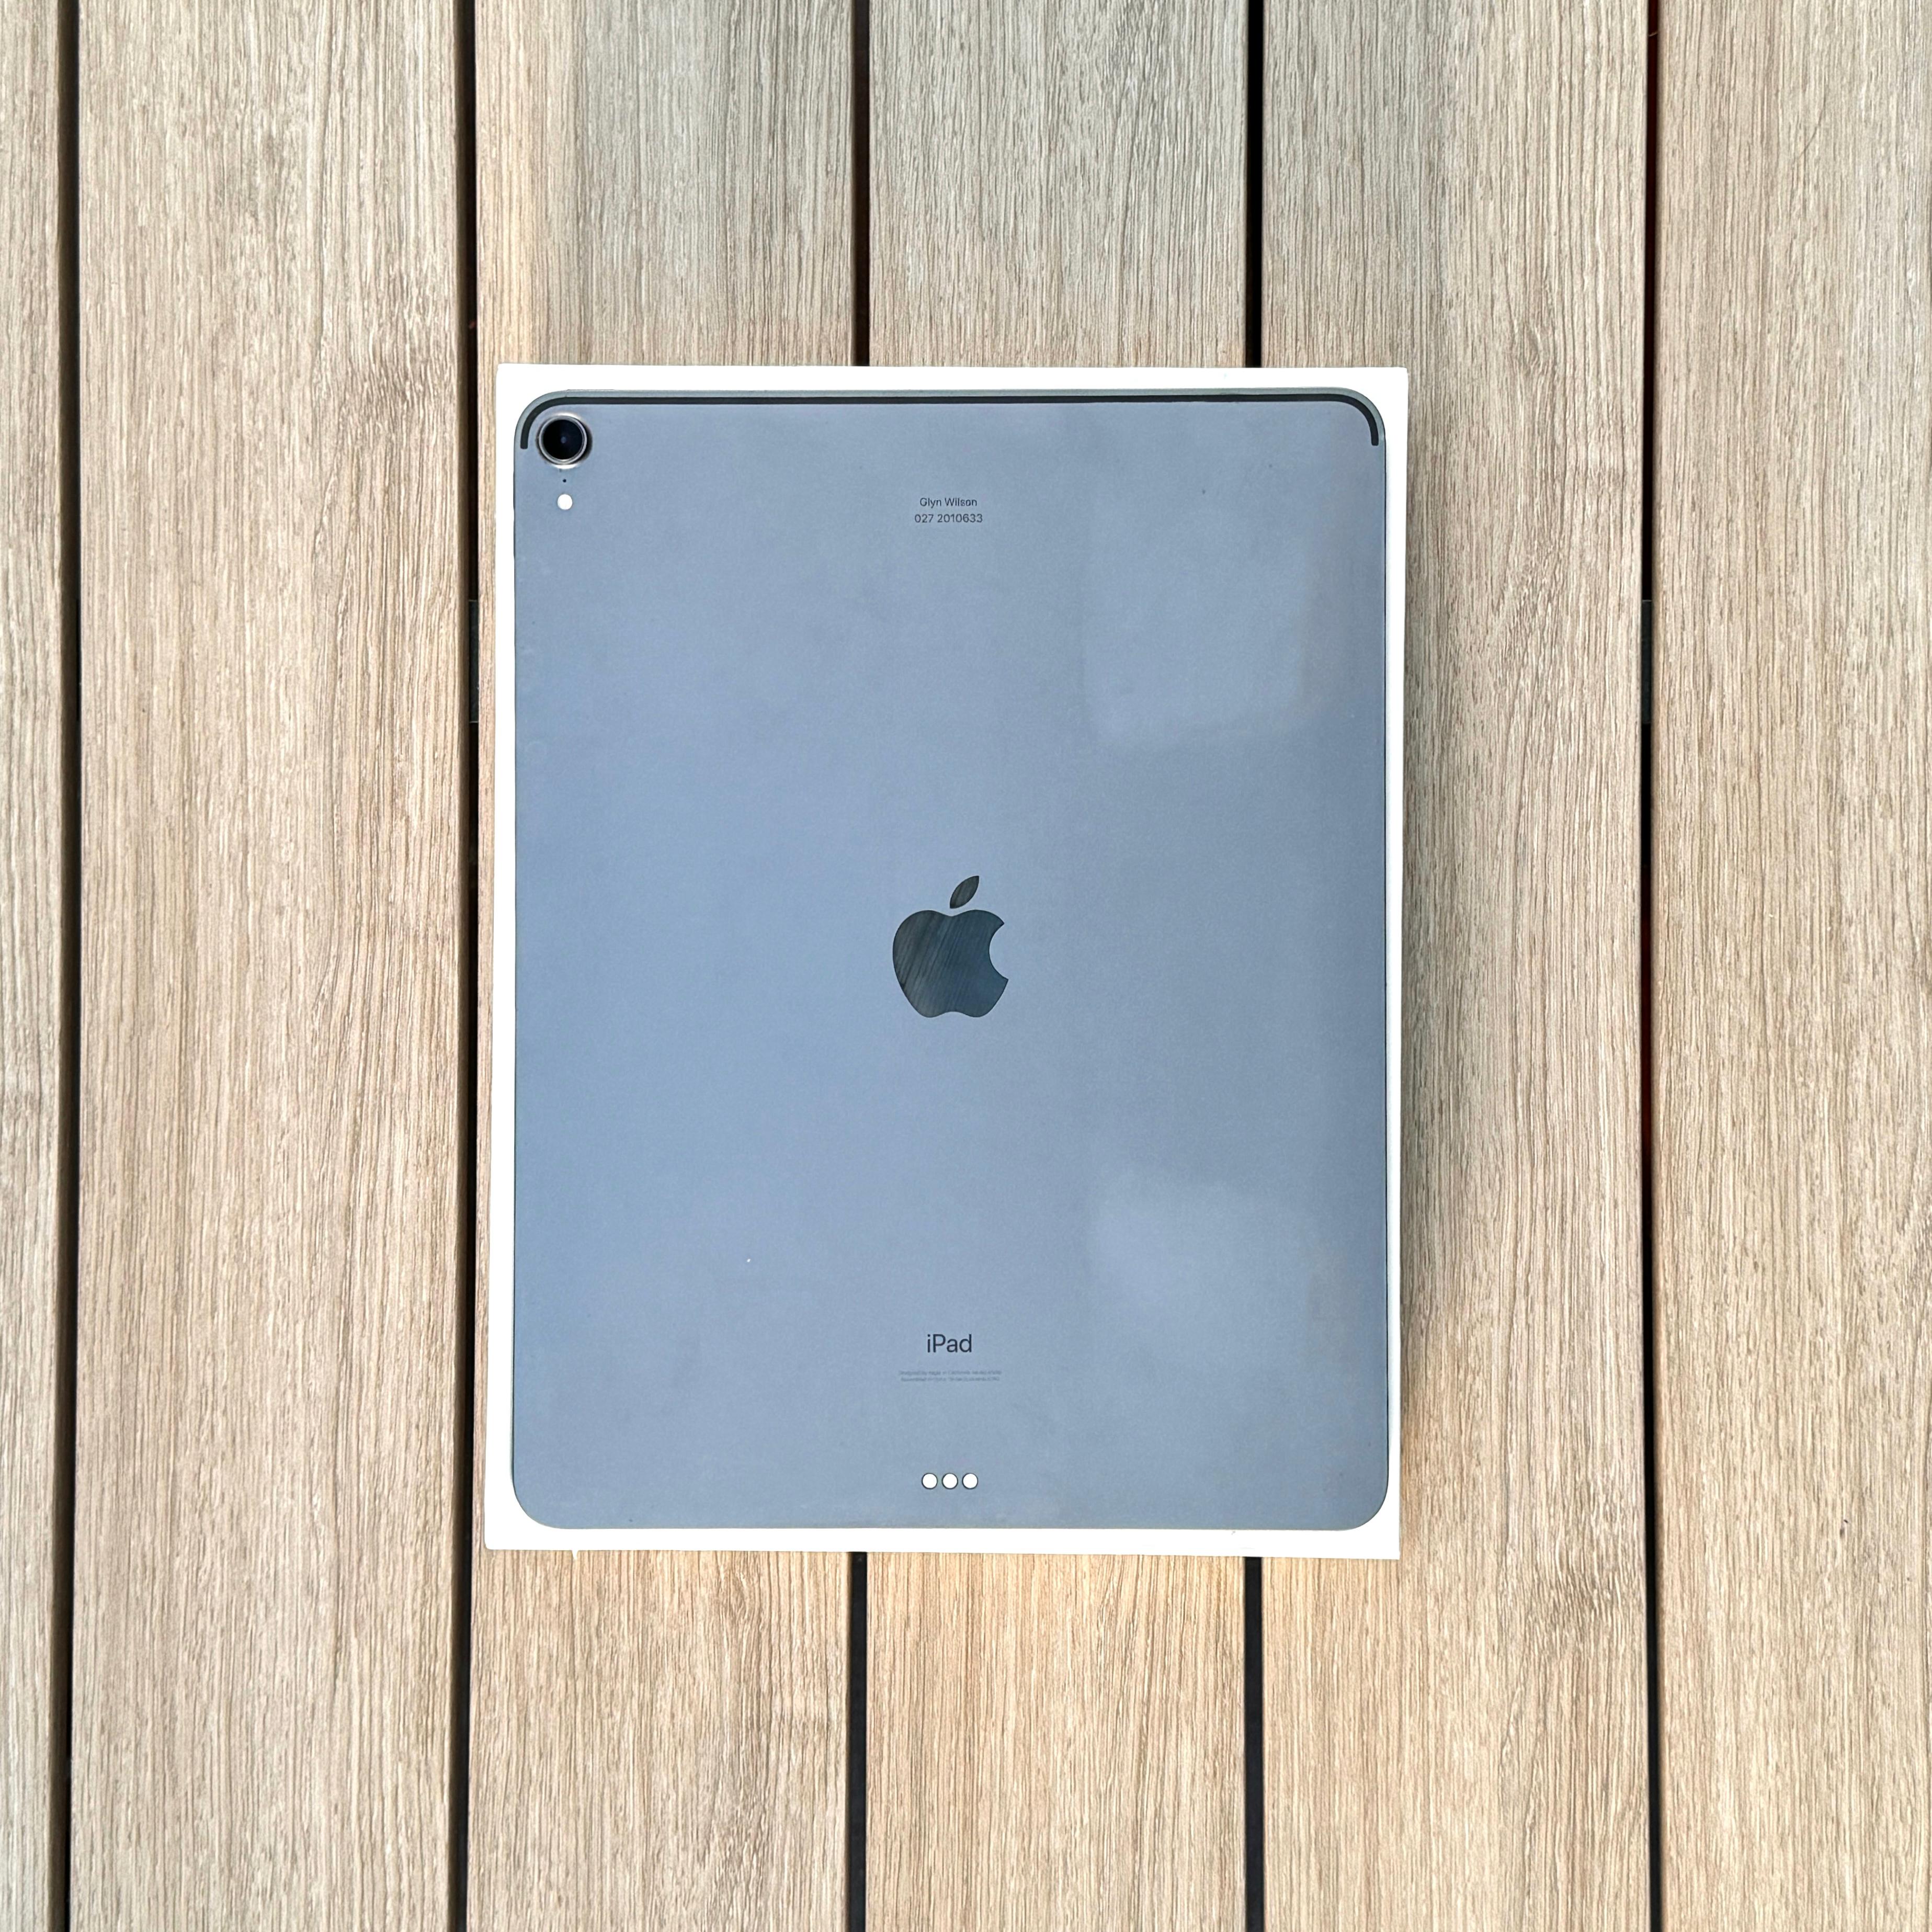 Apple iPad Pro 12.9-inch 3rd Generation 2018 - Wi-Fi  256GB - Space Gray - Original Box (As New)